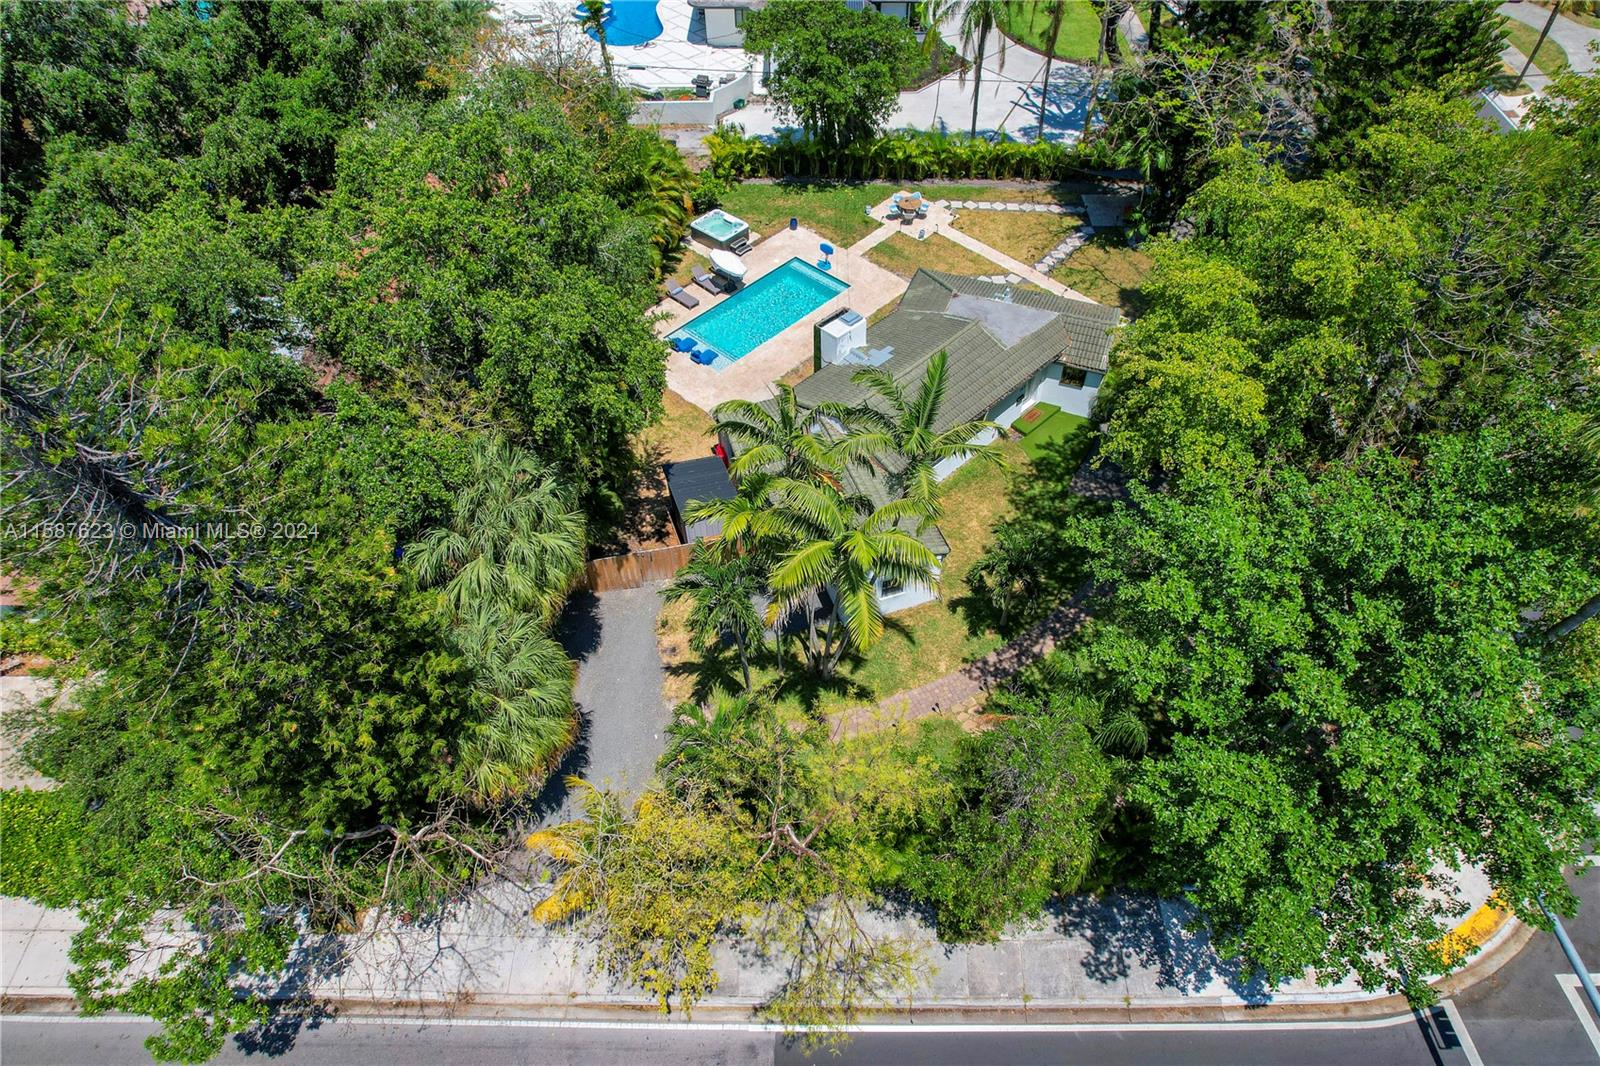 Property for Sale at 15 Ne 95th St, Miami Shores, Miami-Dade County, Florida - Bedrooms: 3 
Bathrooms: 2  - $1,150,000